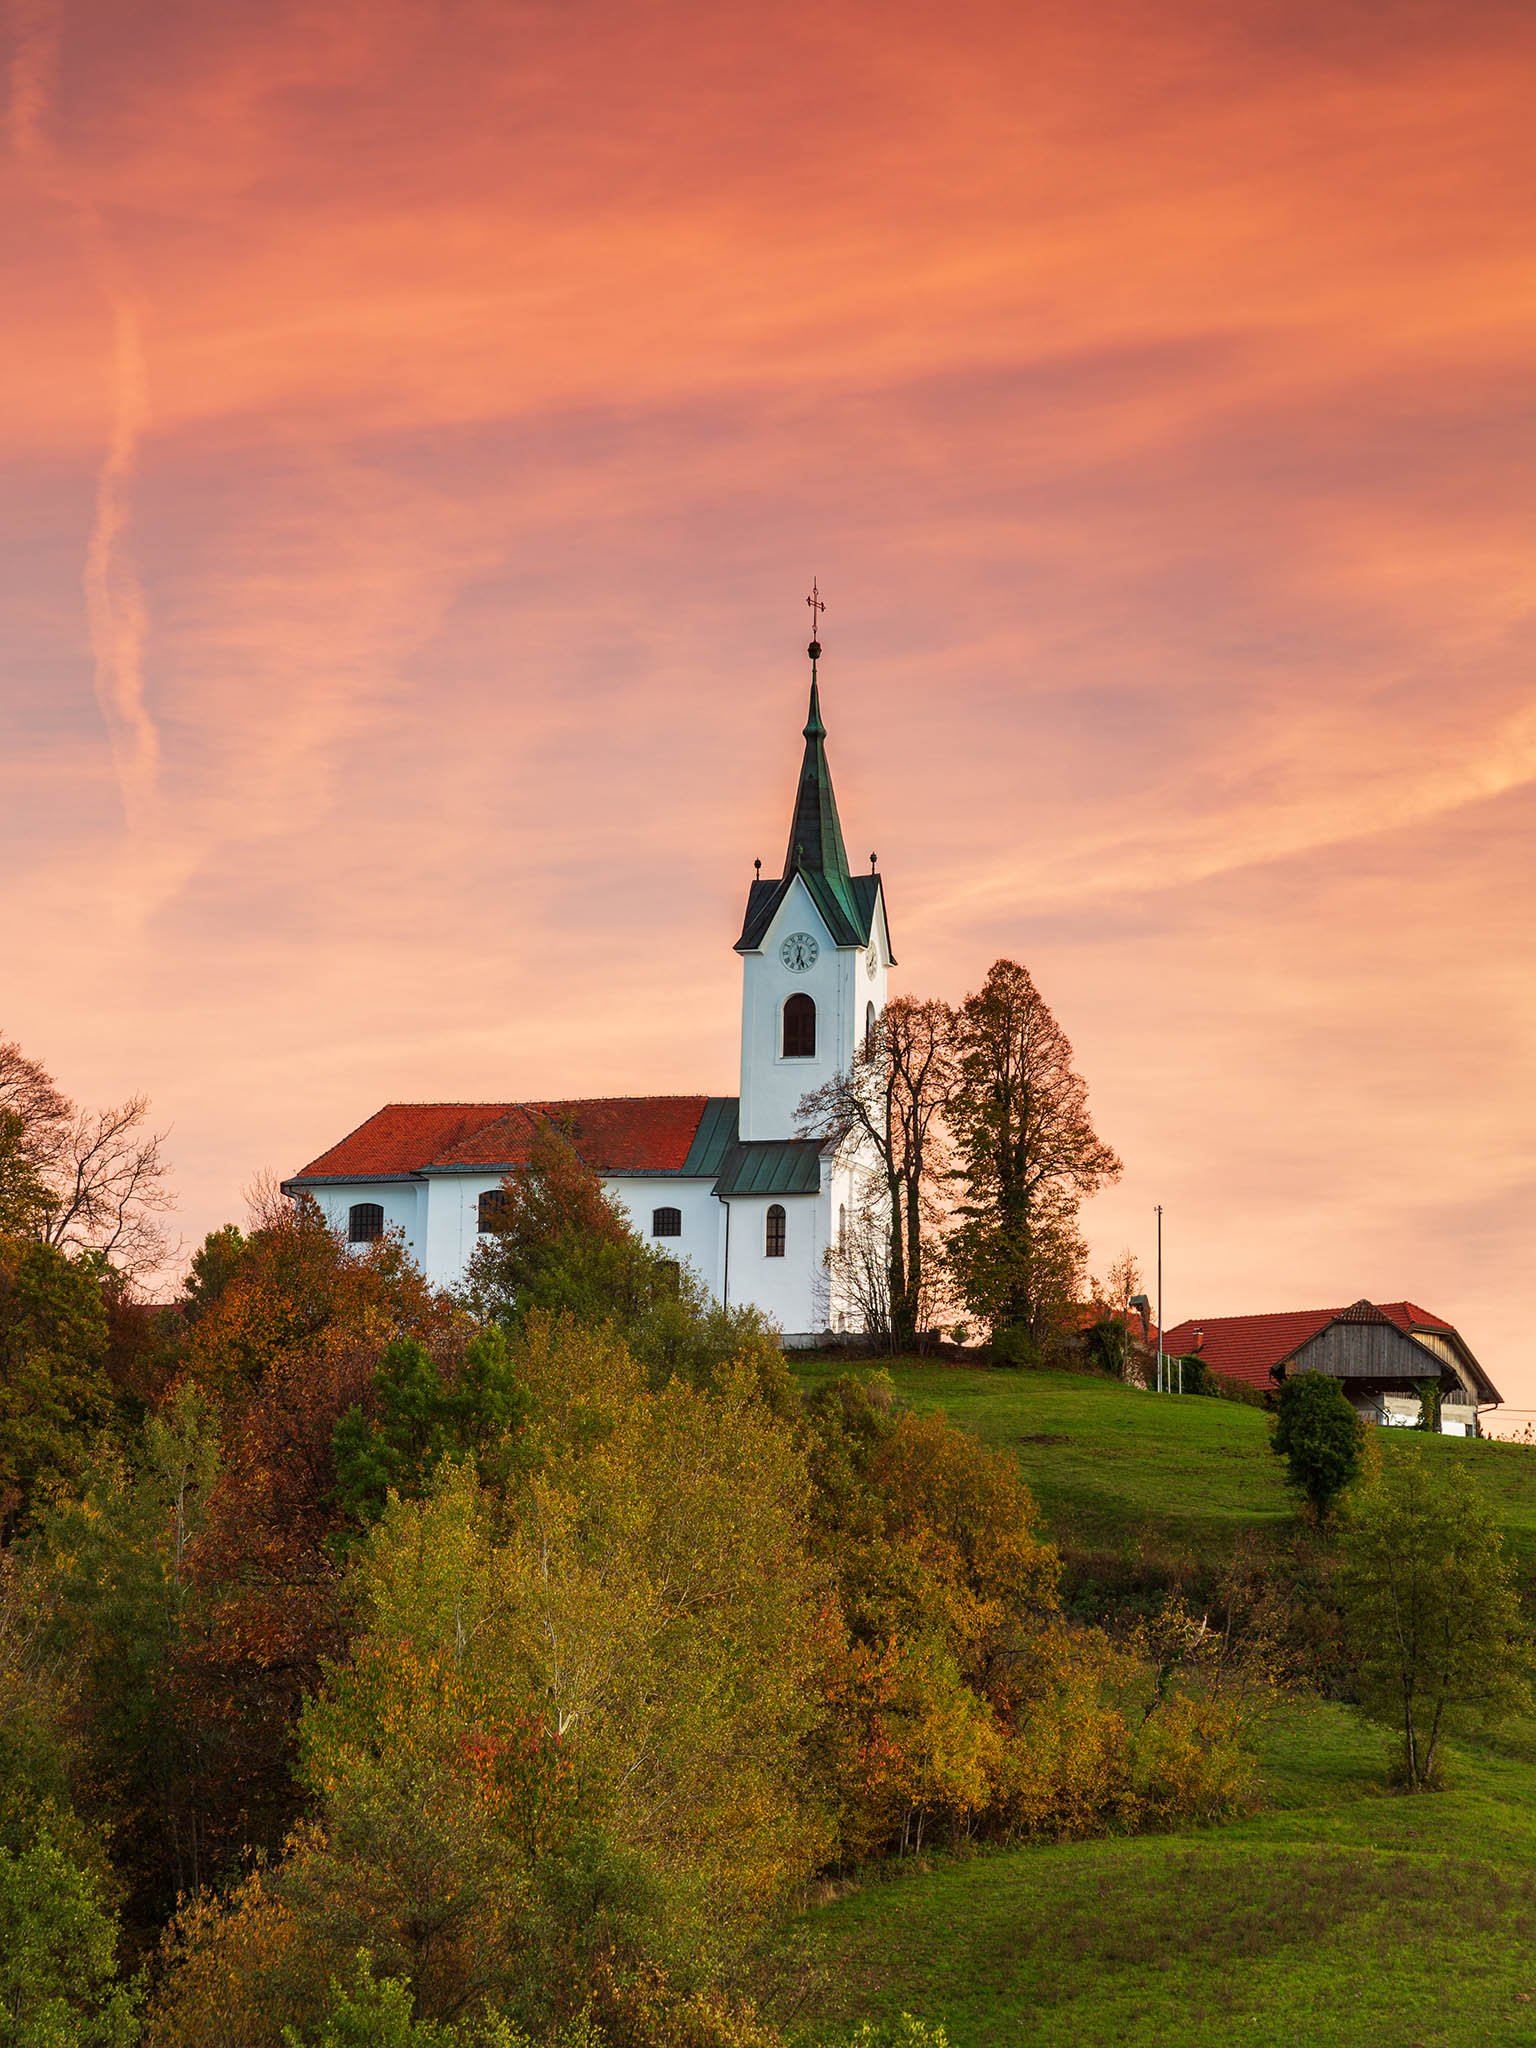 Sunset over the church of Saint Margaret (Marjeta) in Prezganje in the hills to the east of Ljubljana, Slovenia.